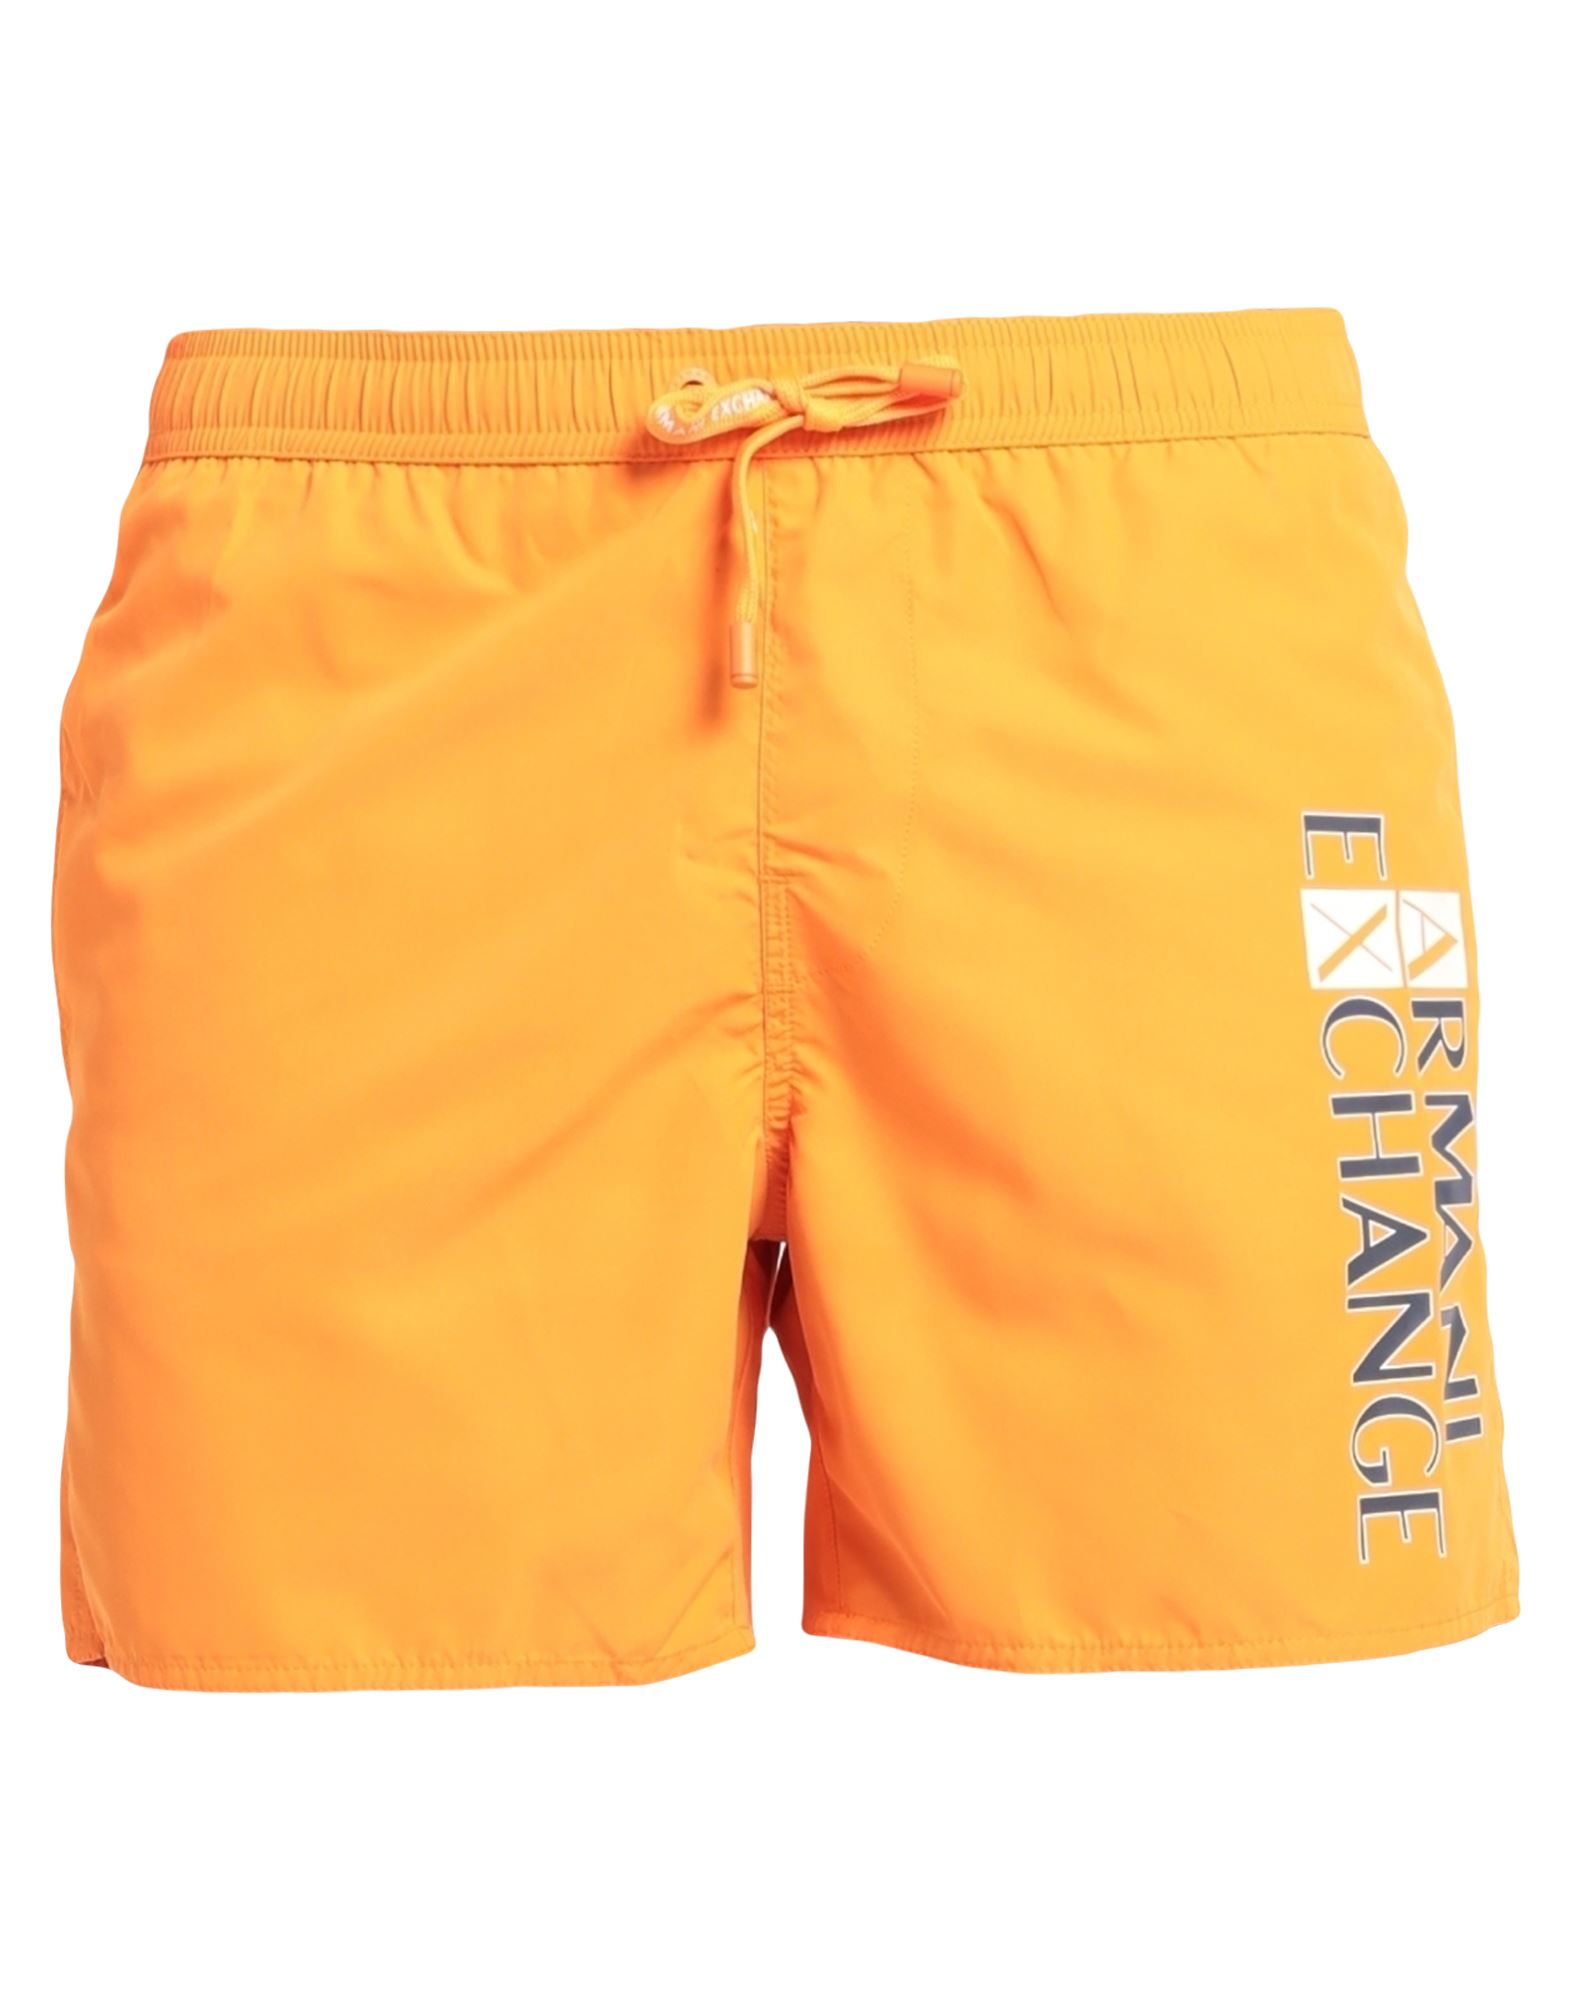 Armani Exchange Swim Trunks In Orange